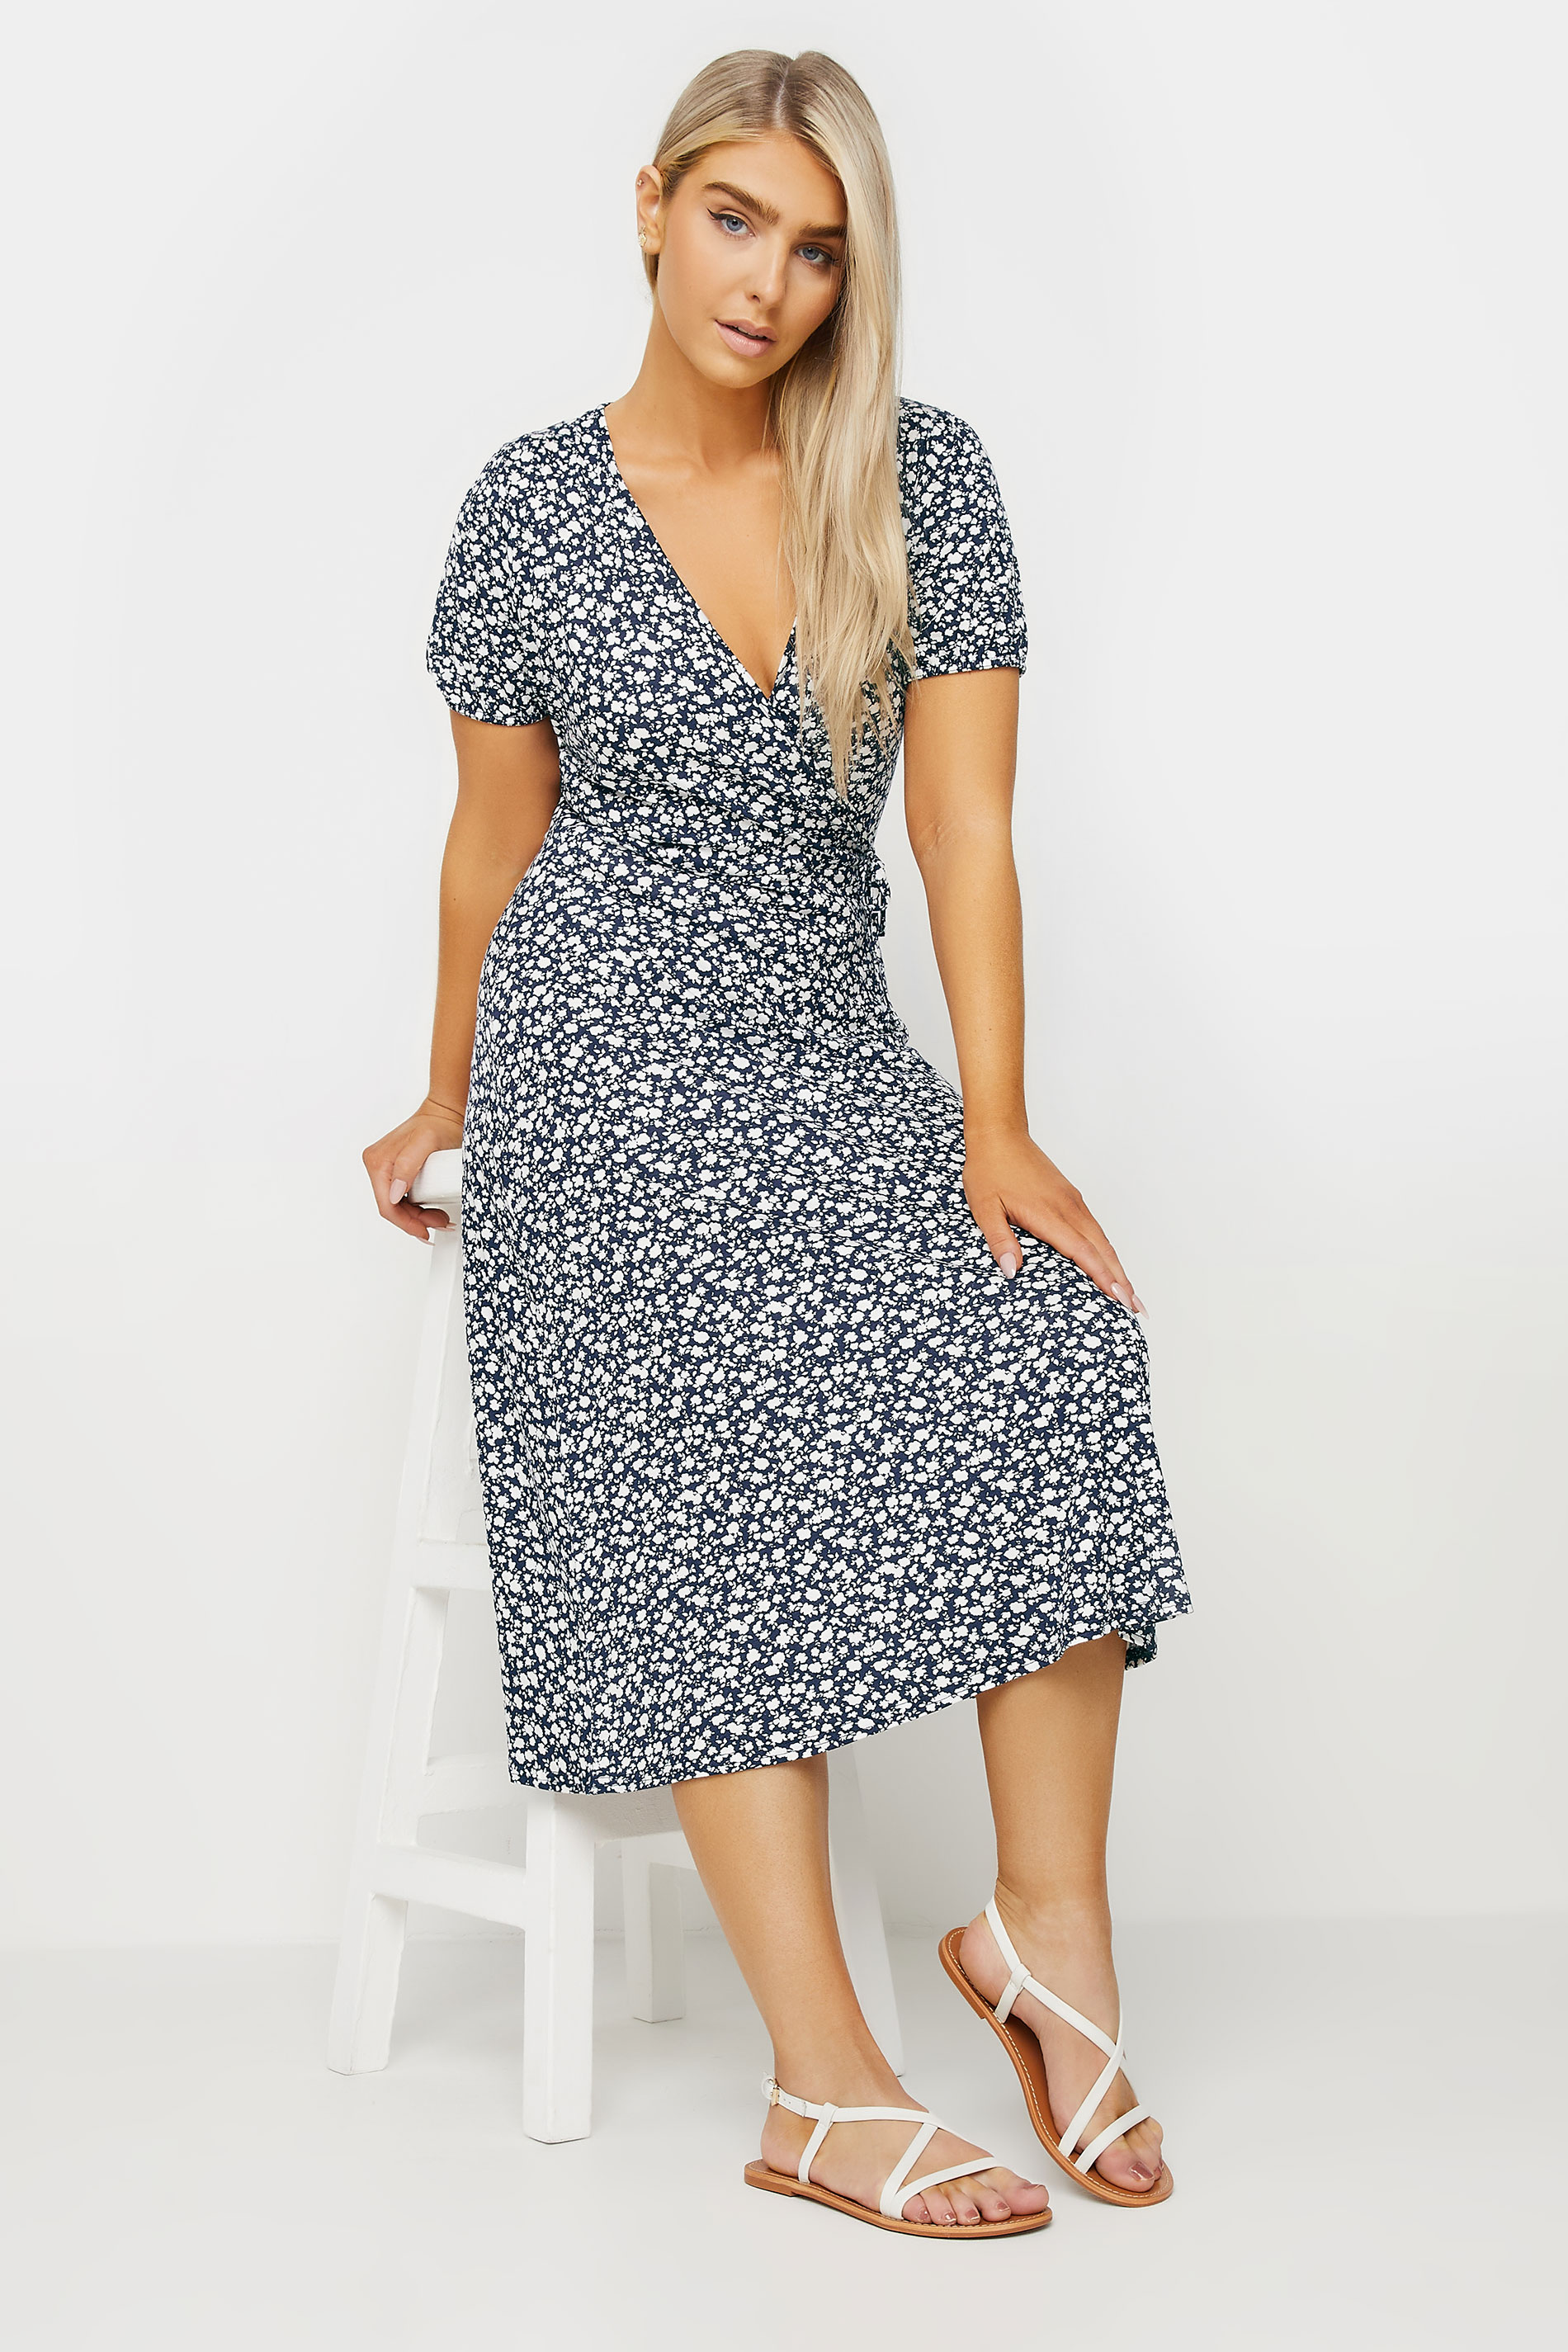 M&Co Navy Blue Ditsy Floral Print Midi Wrap Dress | M&Co 2